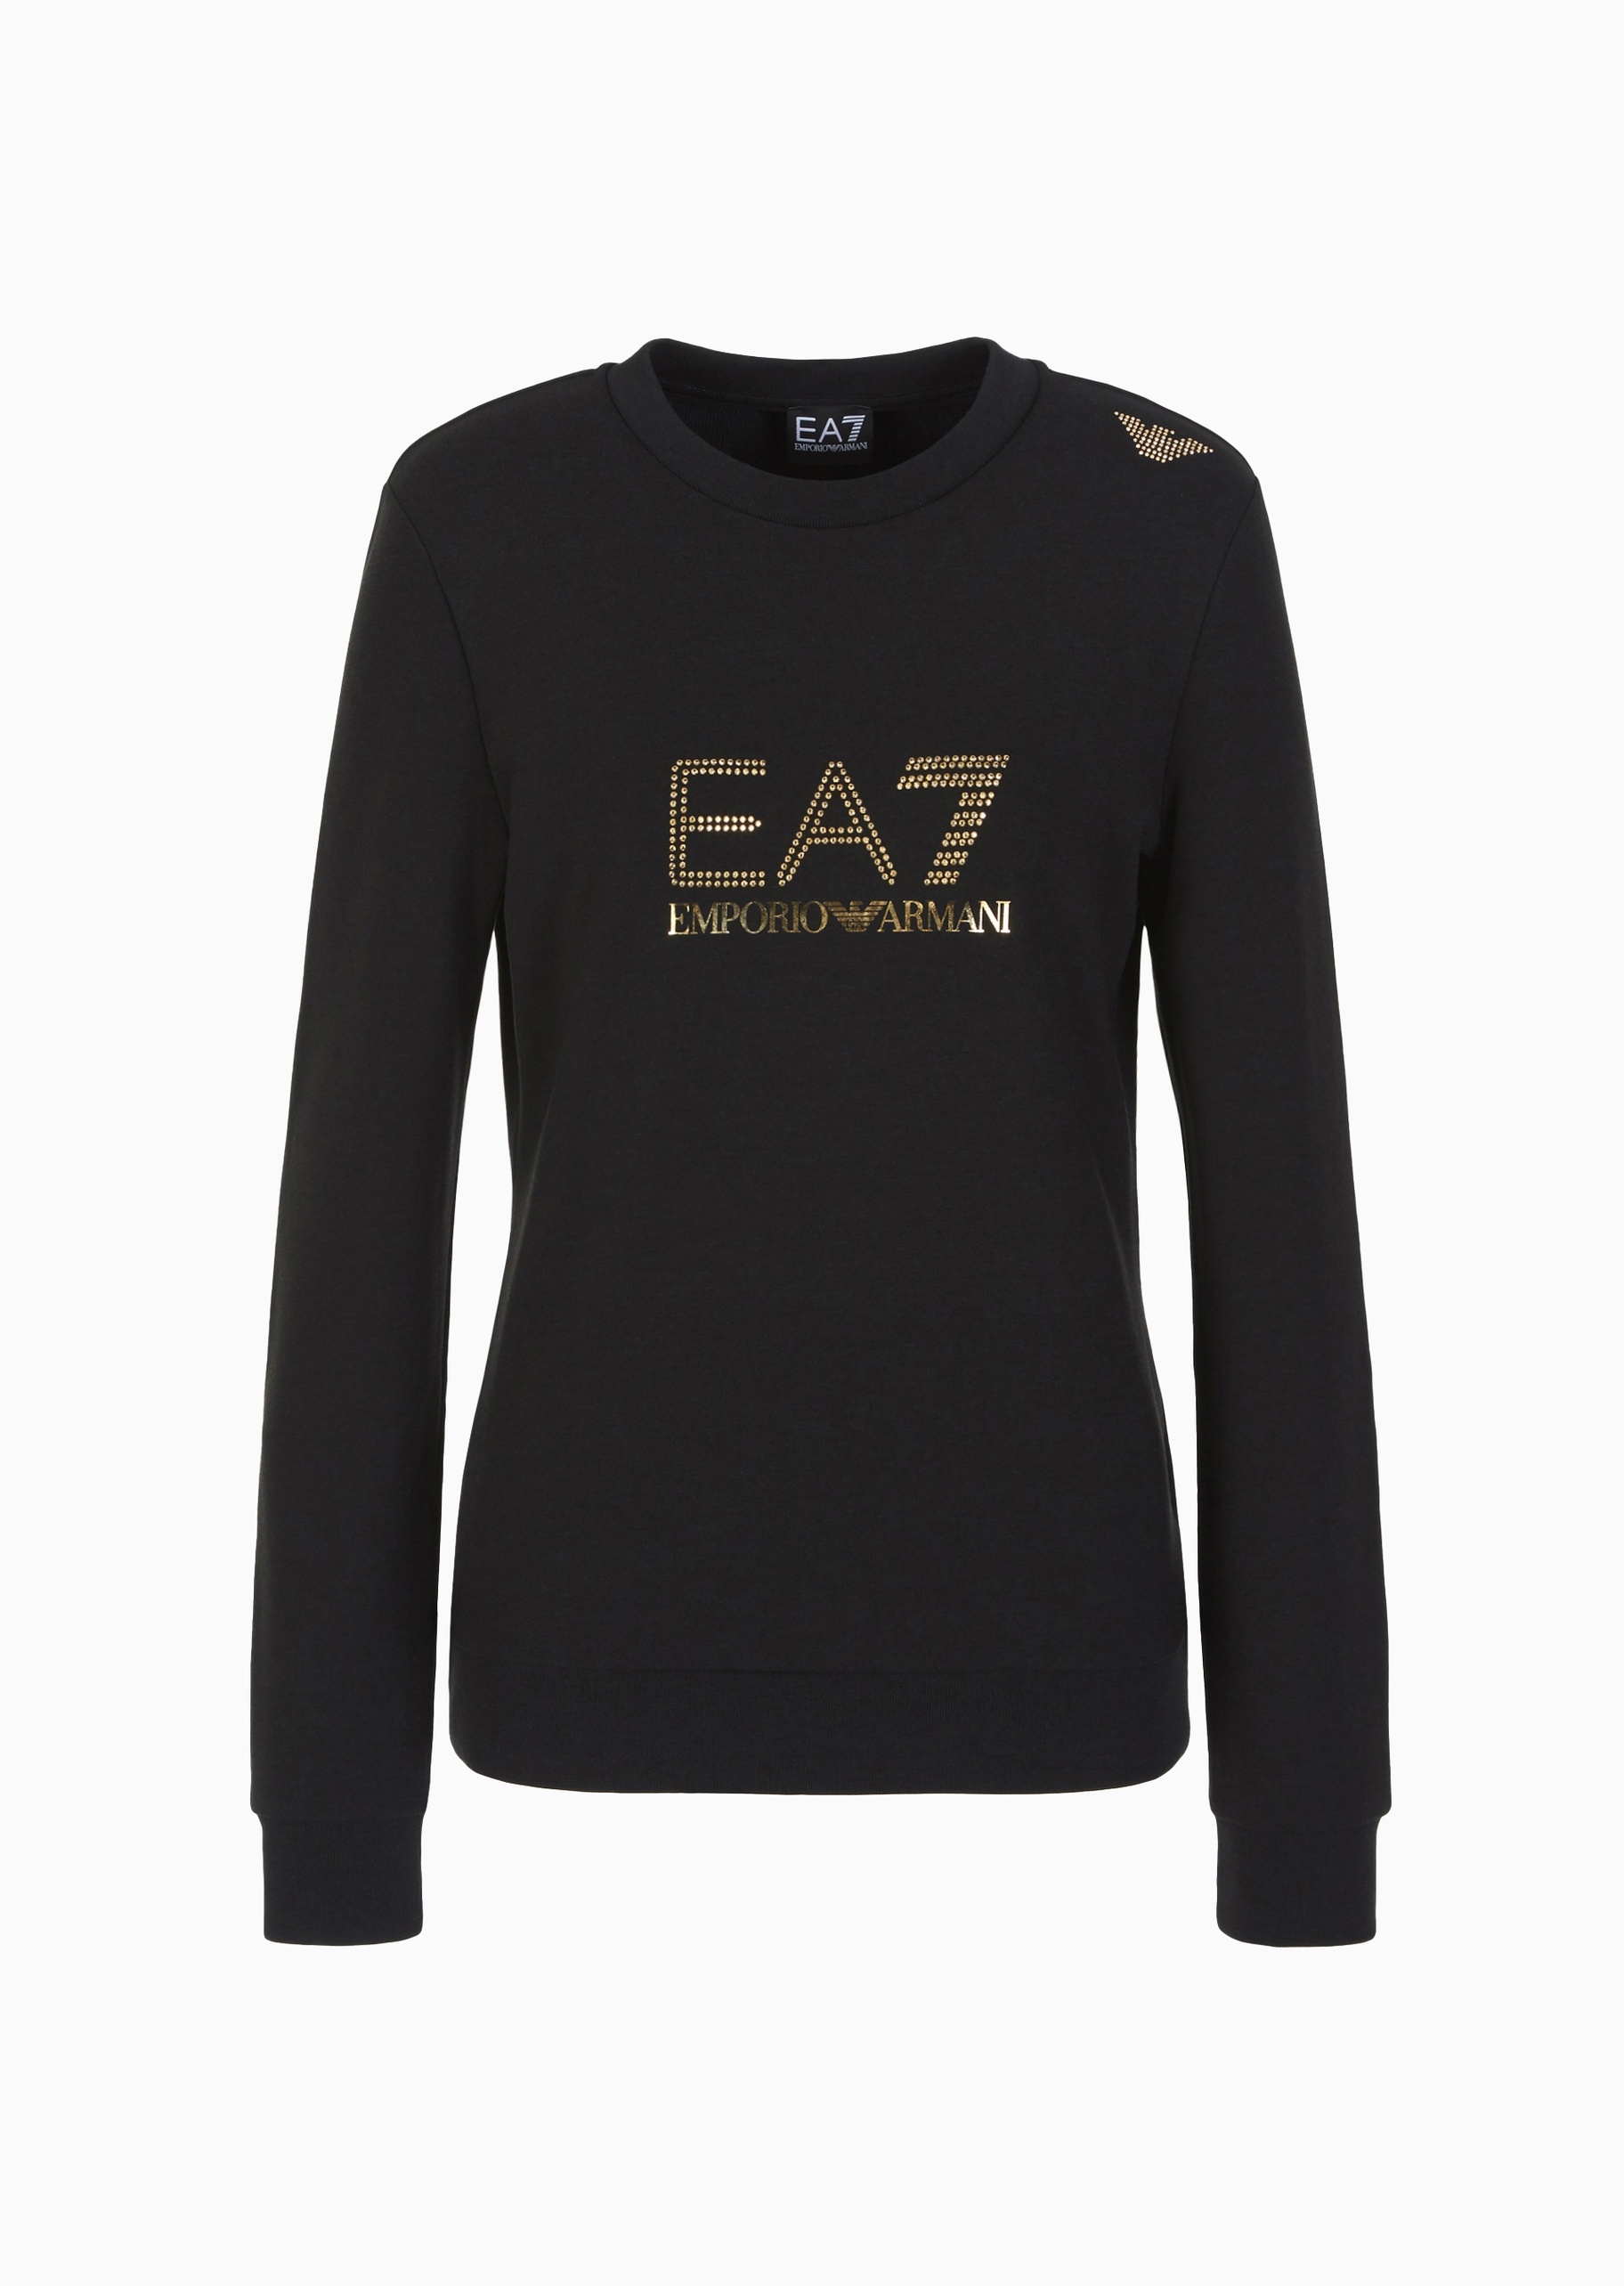 EA7 女士微弹合身长袖圆领创意健身训练卫衣